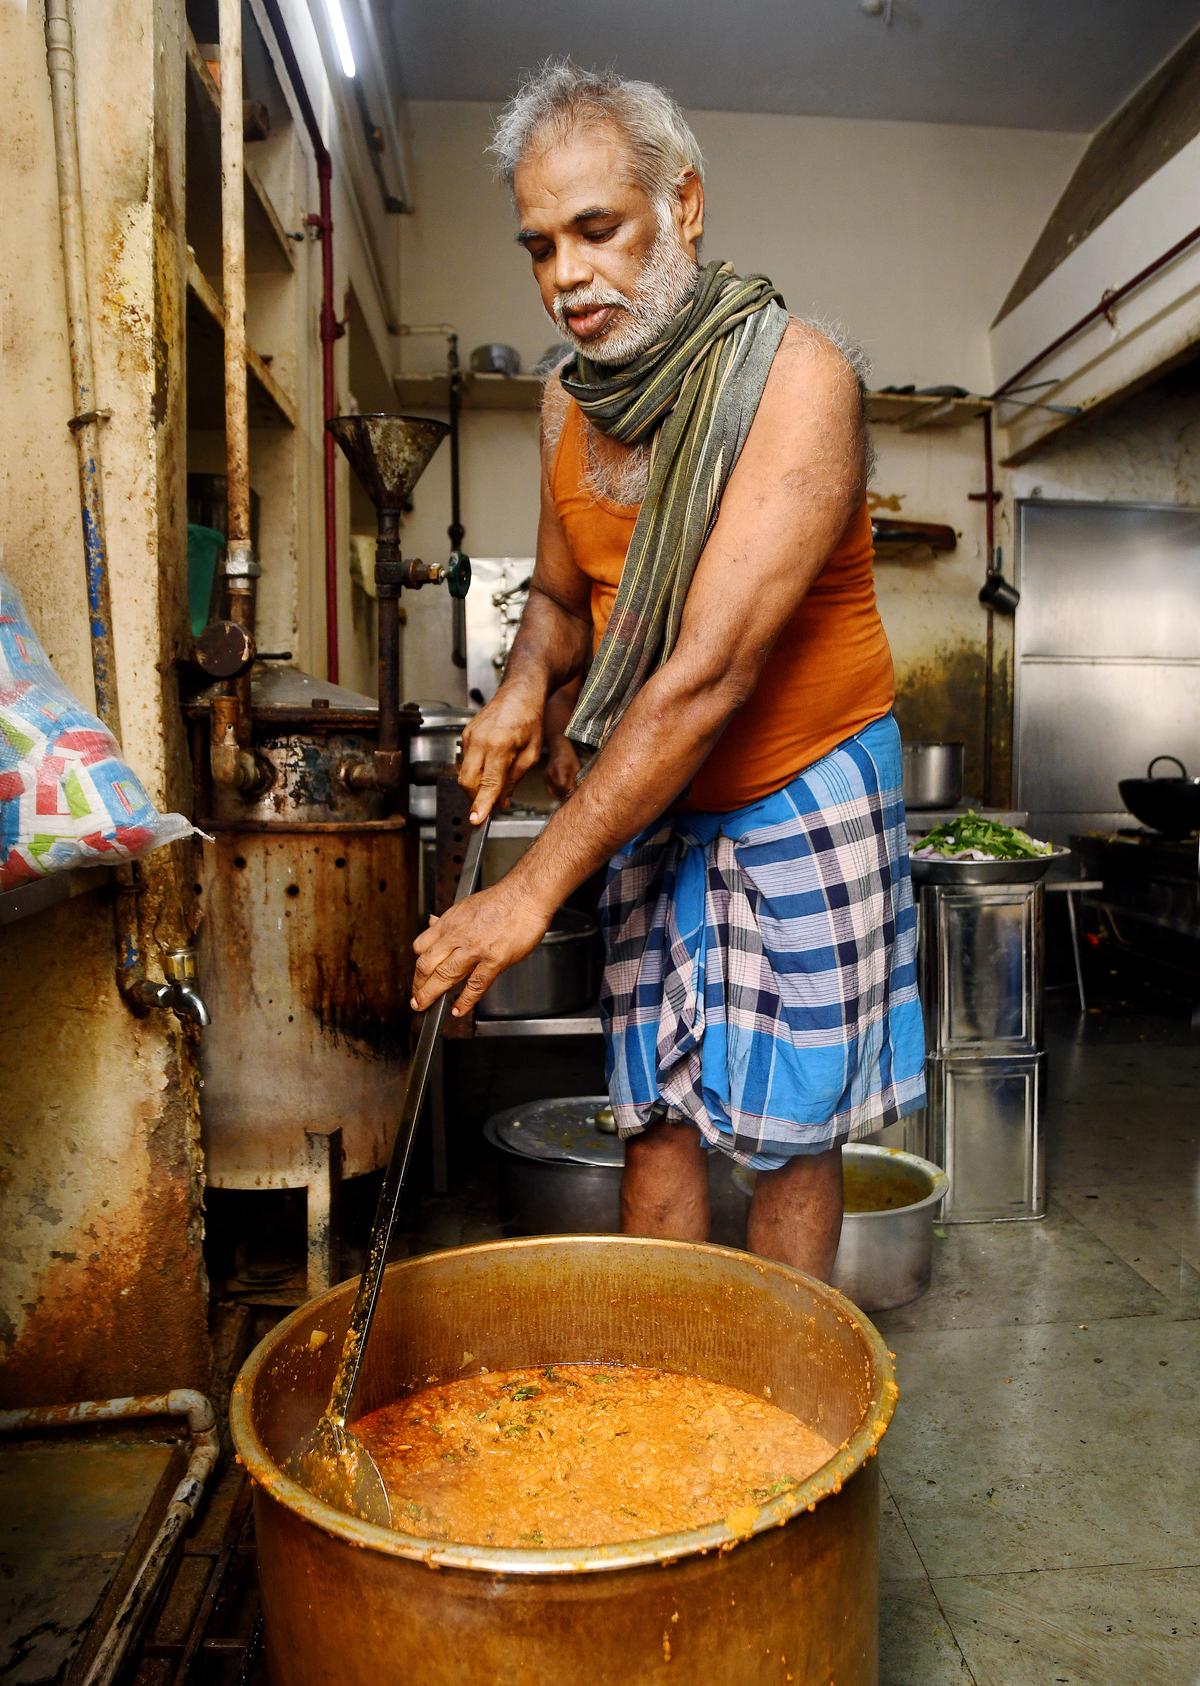 Vada curry being prepared at Mari Hotel, Saidapet.